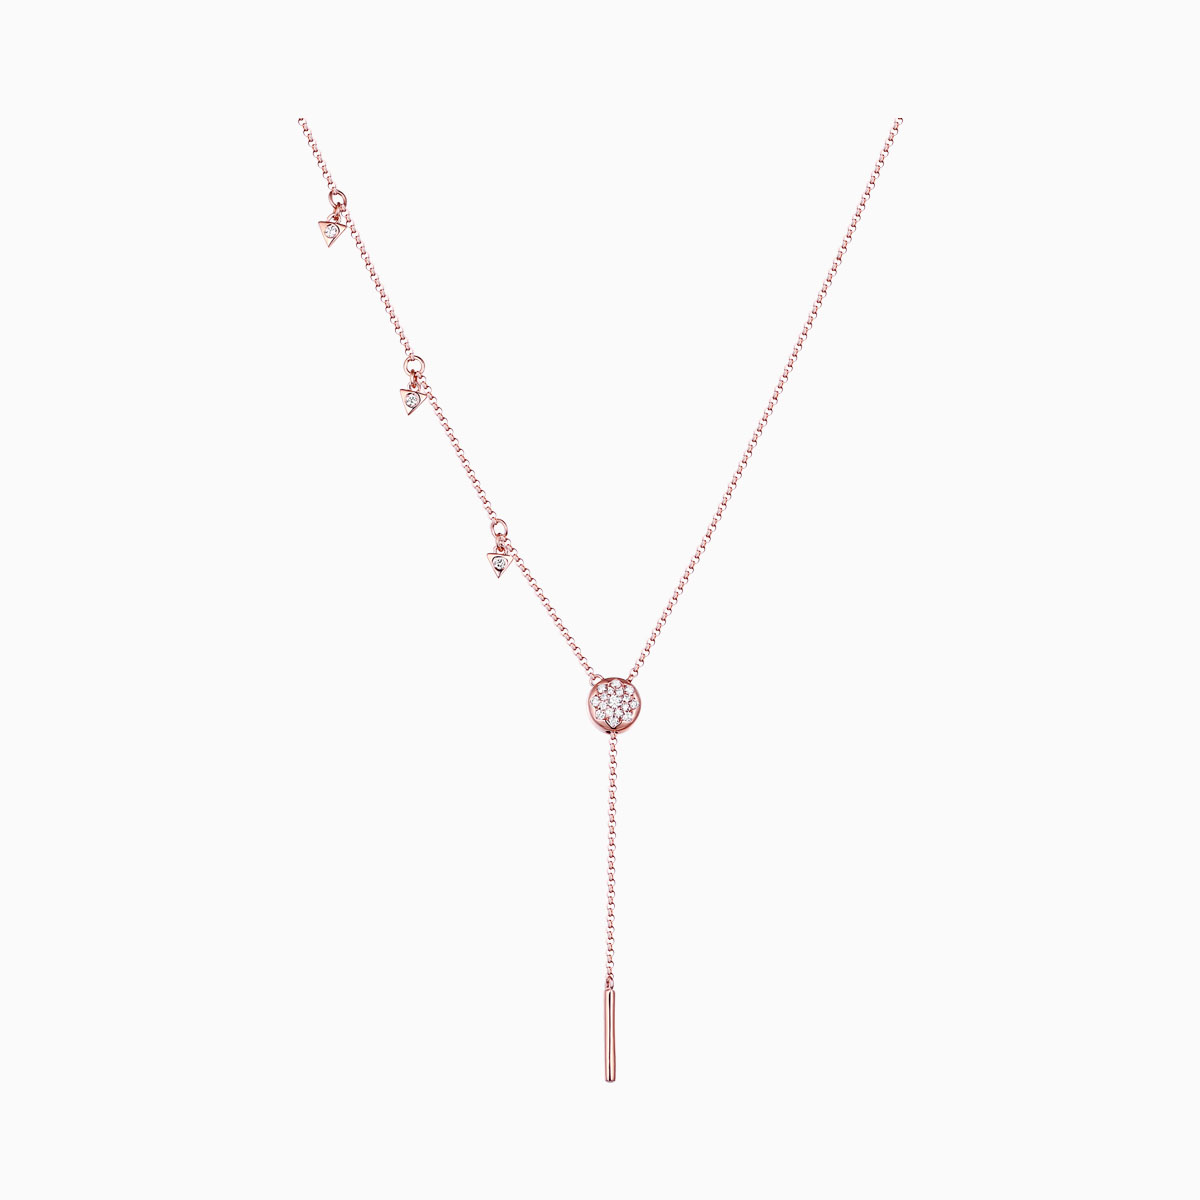 NL25769WHT- 14K Rose Gold Diamond Necklace, 0.16 TCW